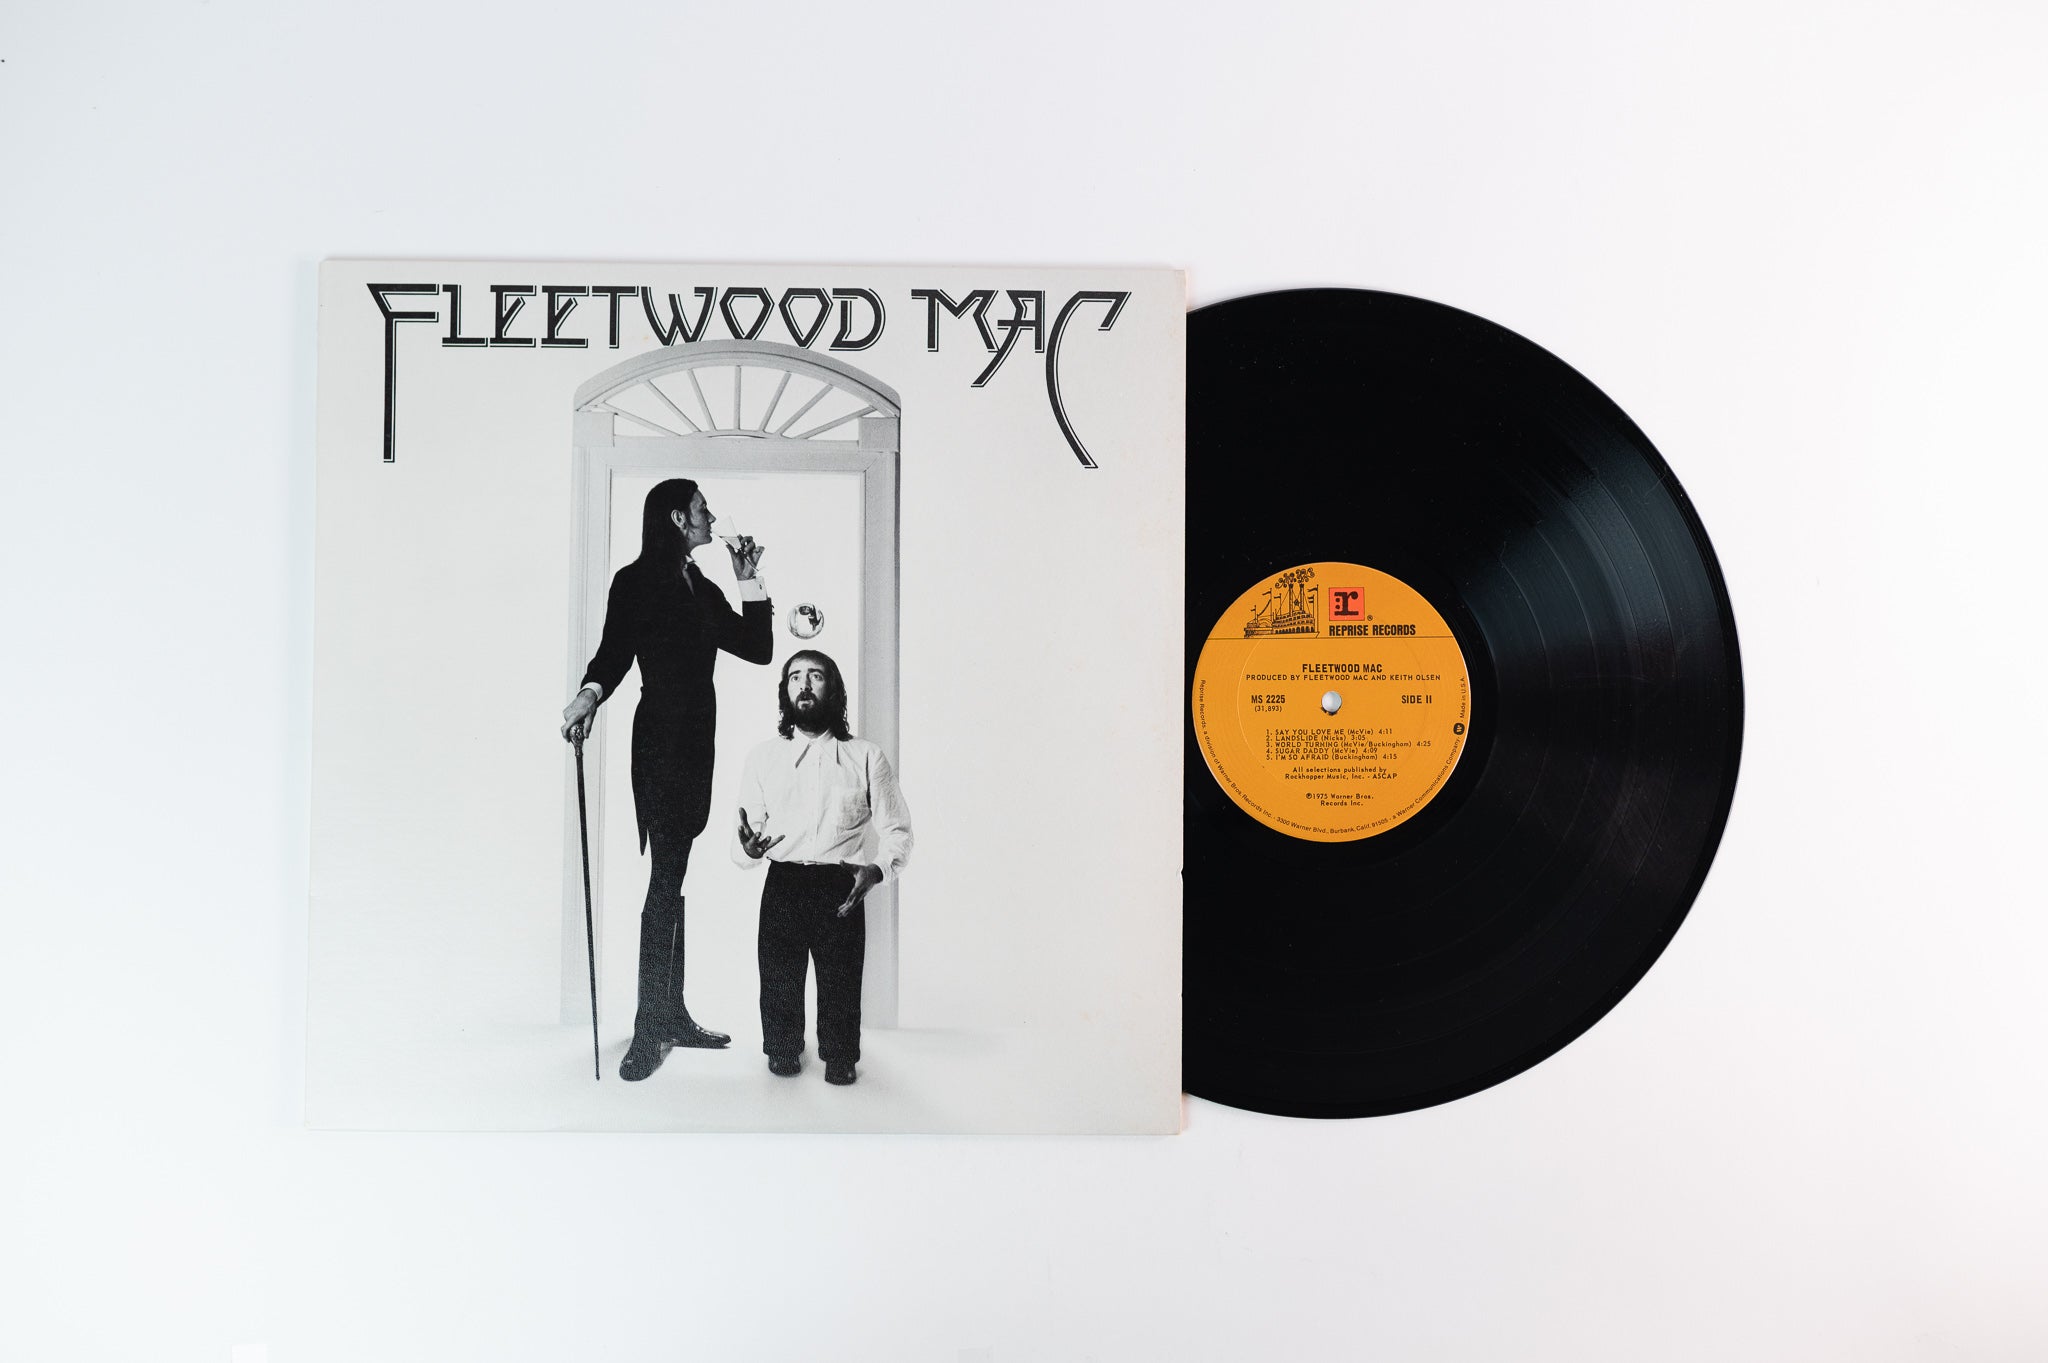 Fleetwood Mac - Fleetwood Mac on Reprise